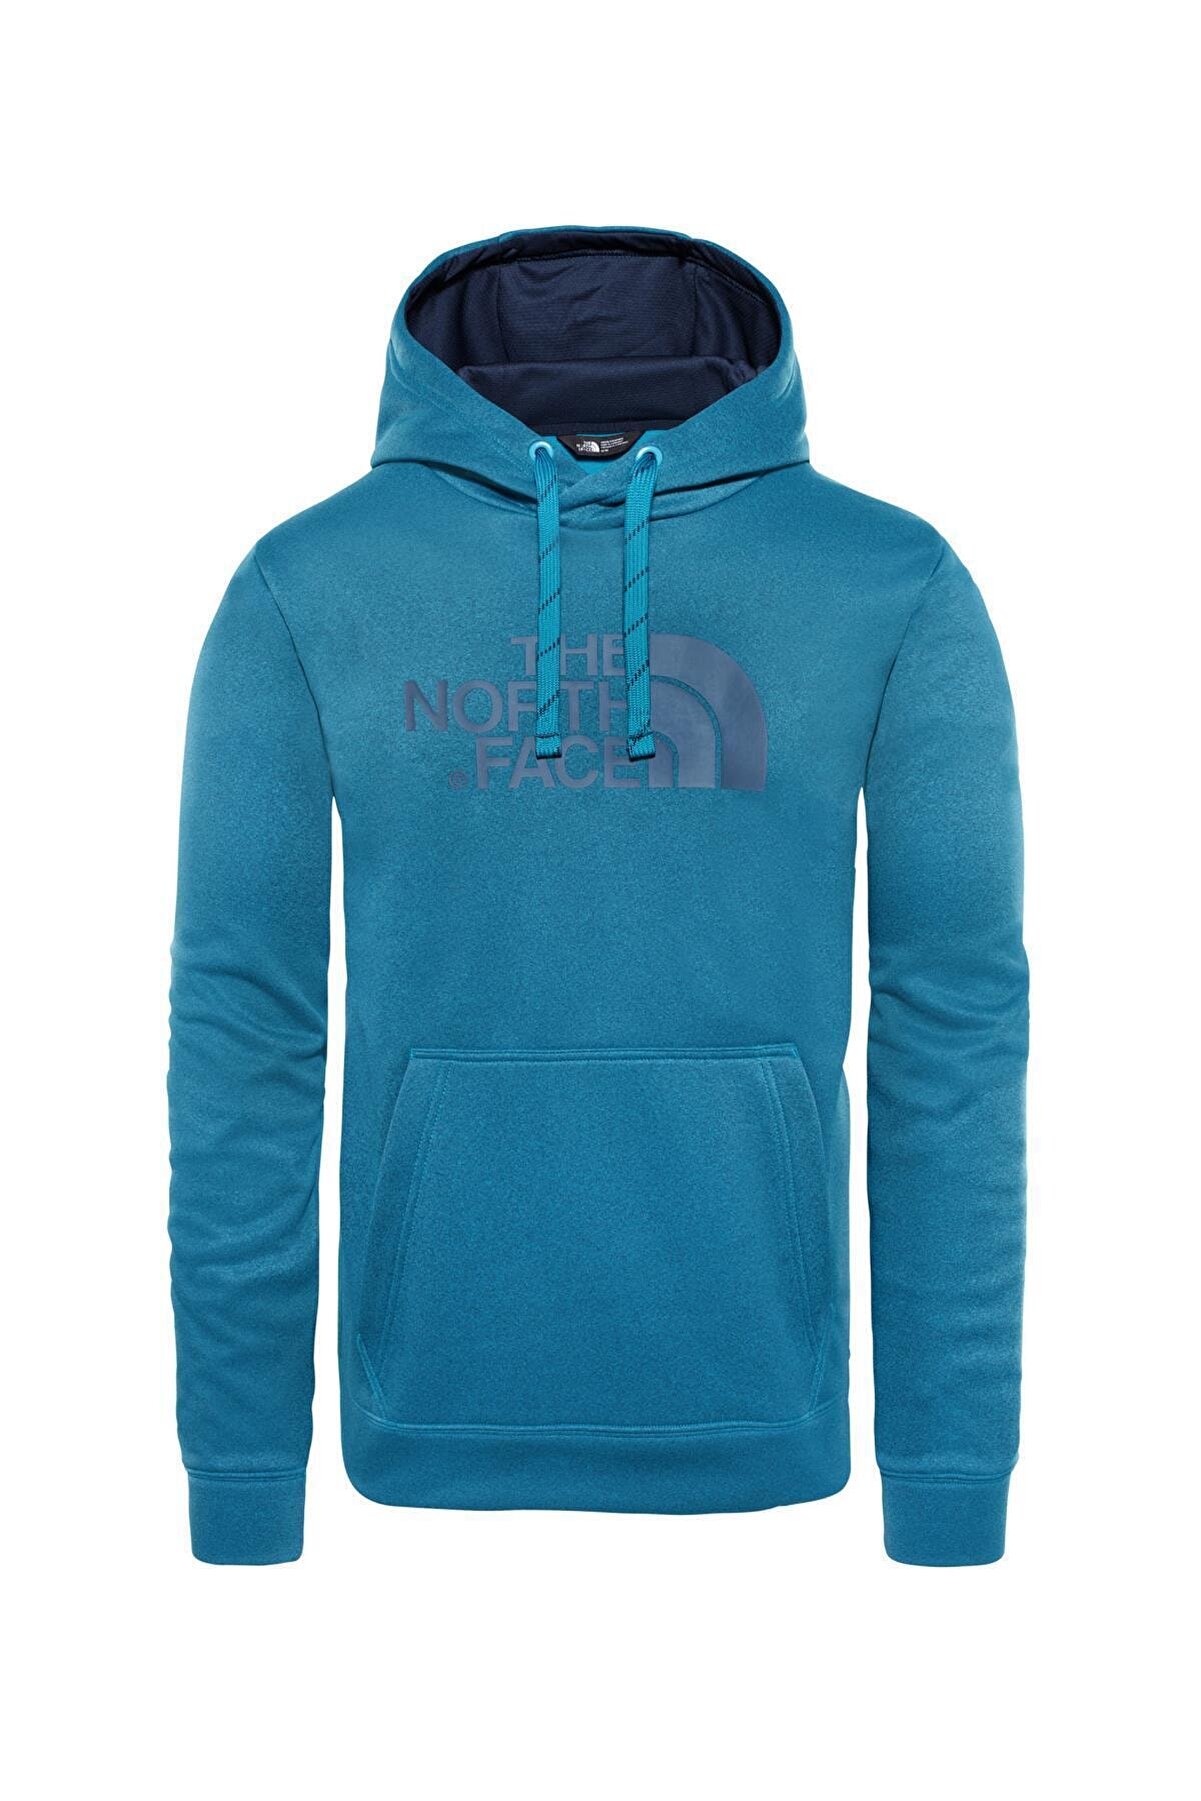 The North Face Surgent Hoodie Erkek Sweatshirt